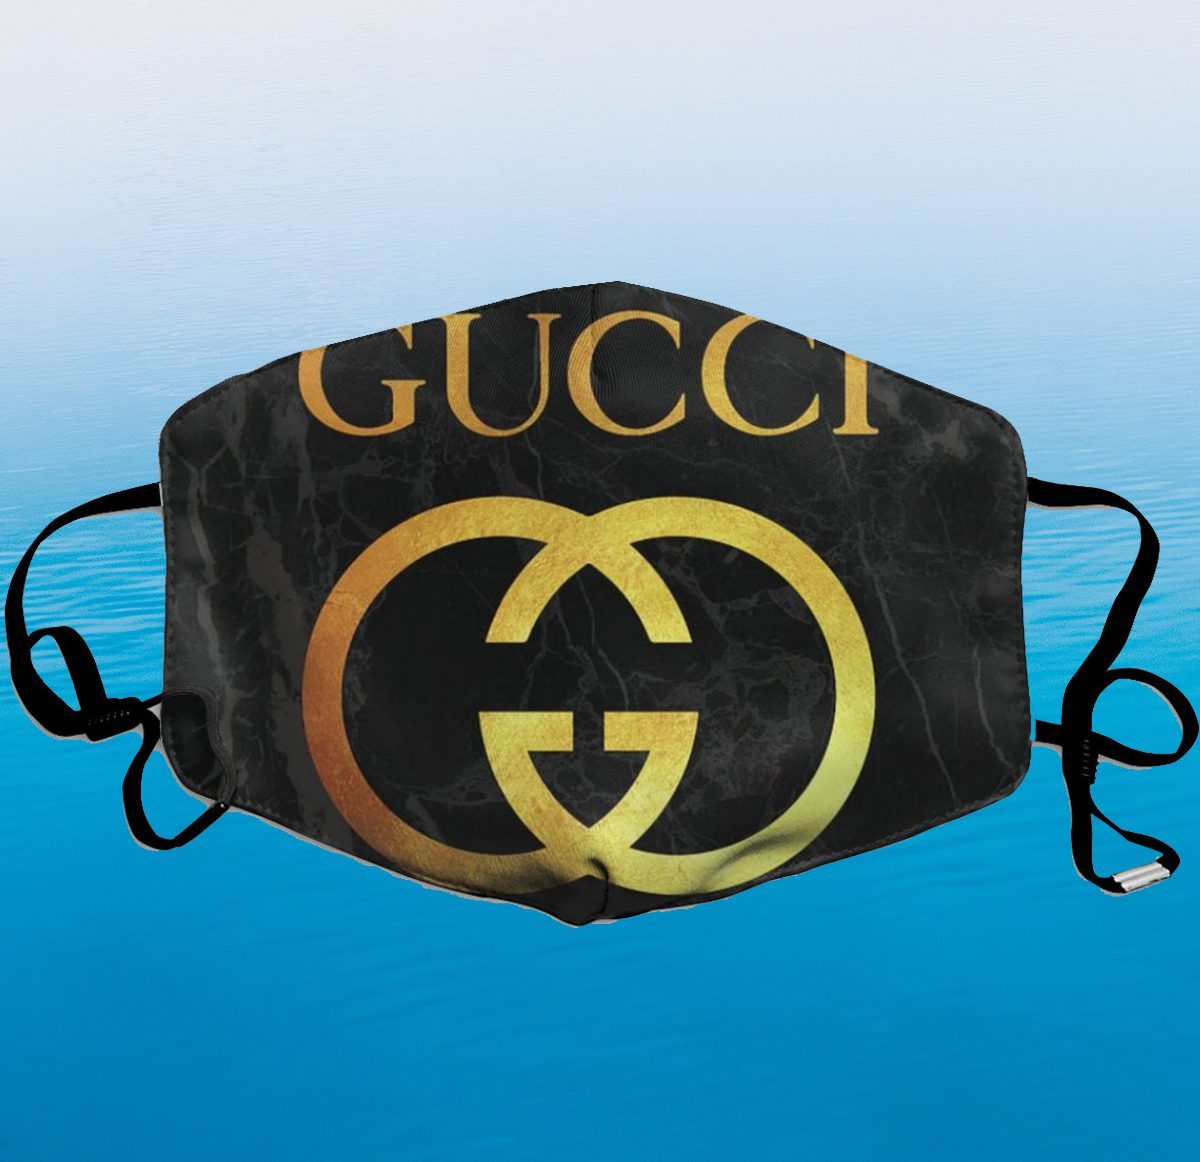 Af storm overskud skæg Gucci Face Mask – Black and Gold – Lifestyle and Fashion Face Cover -  ShirtsMango Office